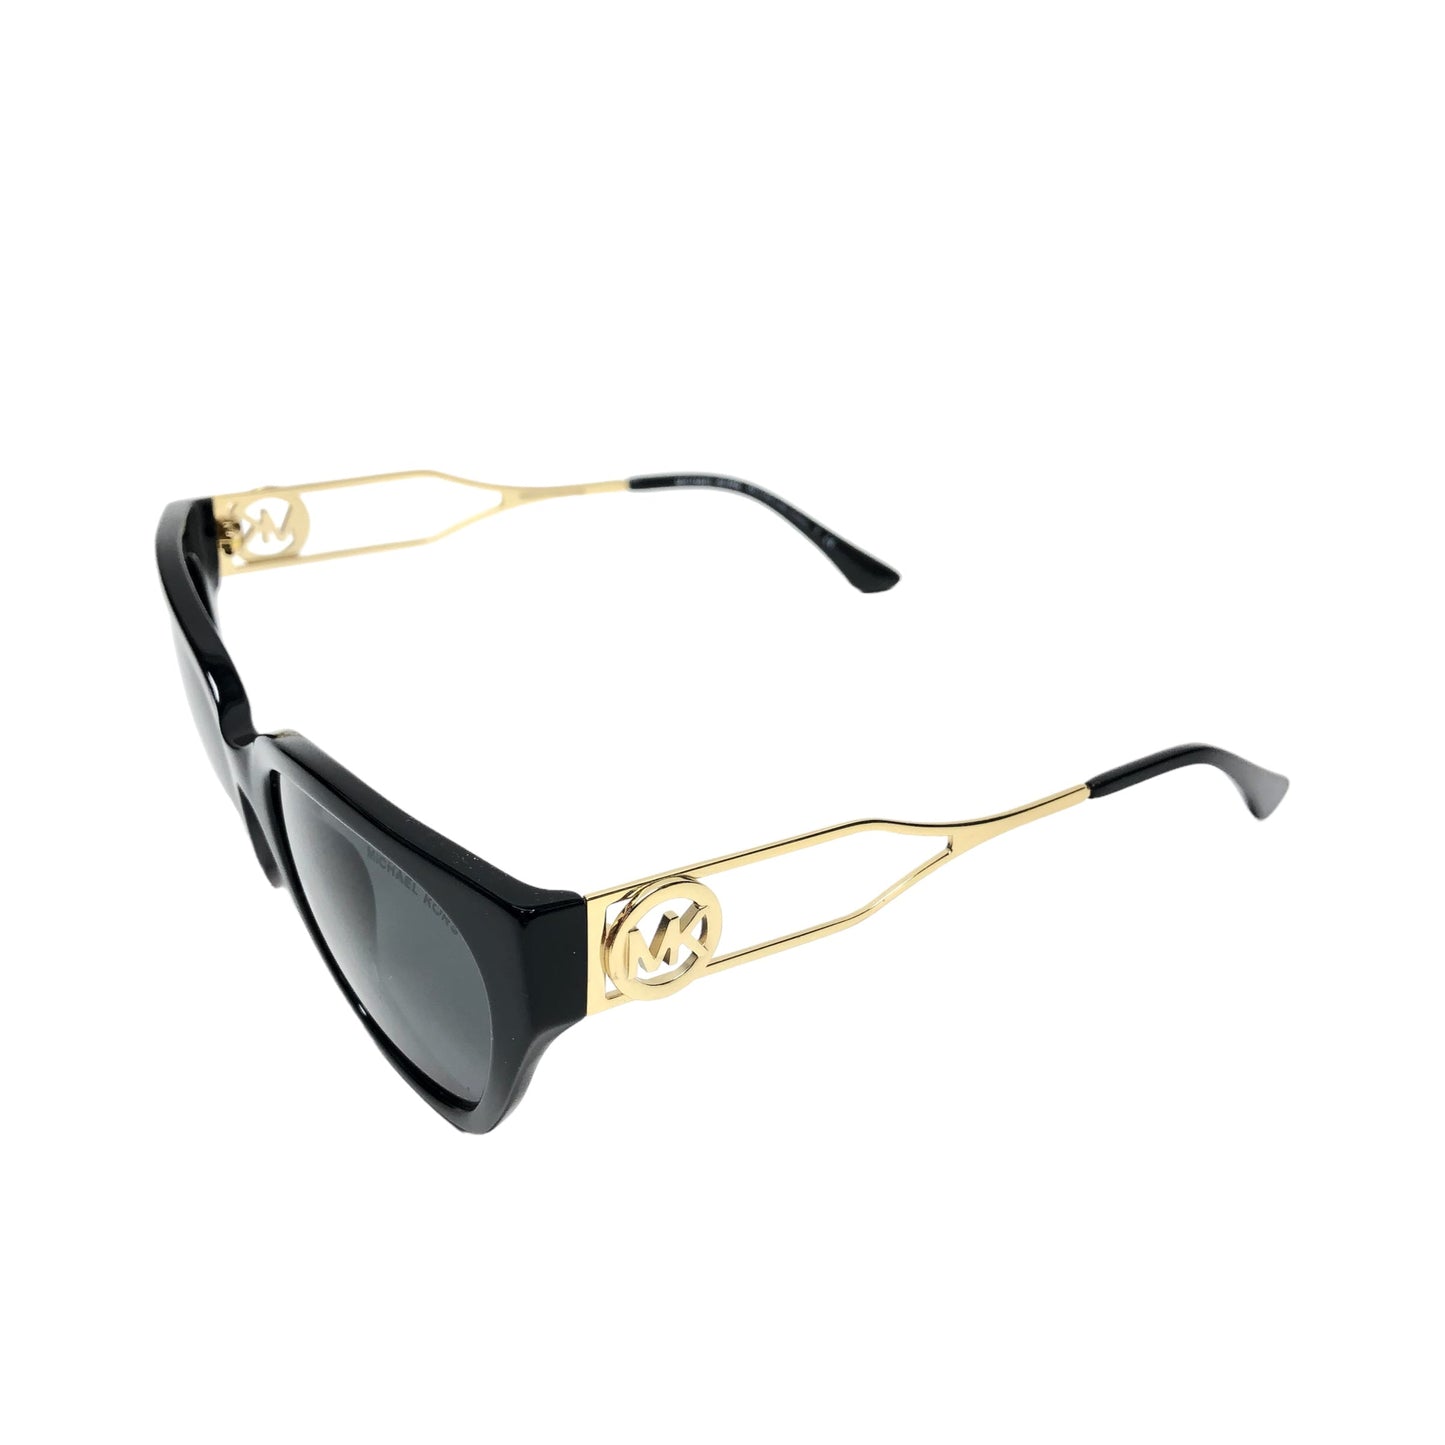 Sunglasses Designer Michael Kors